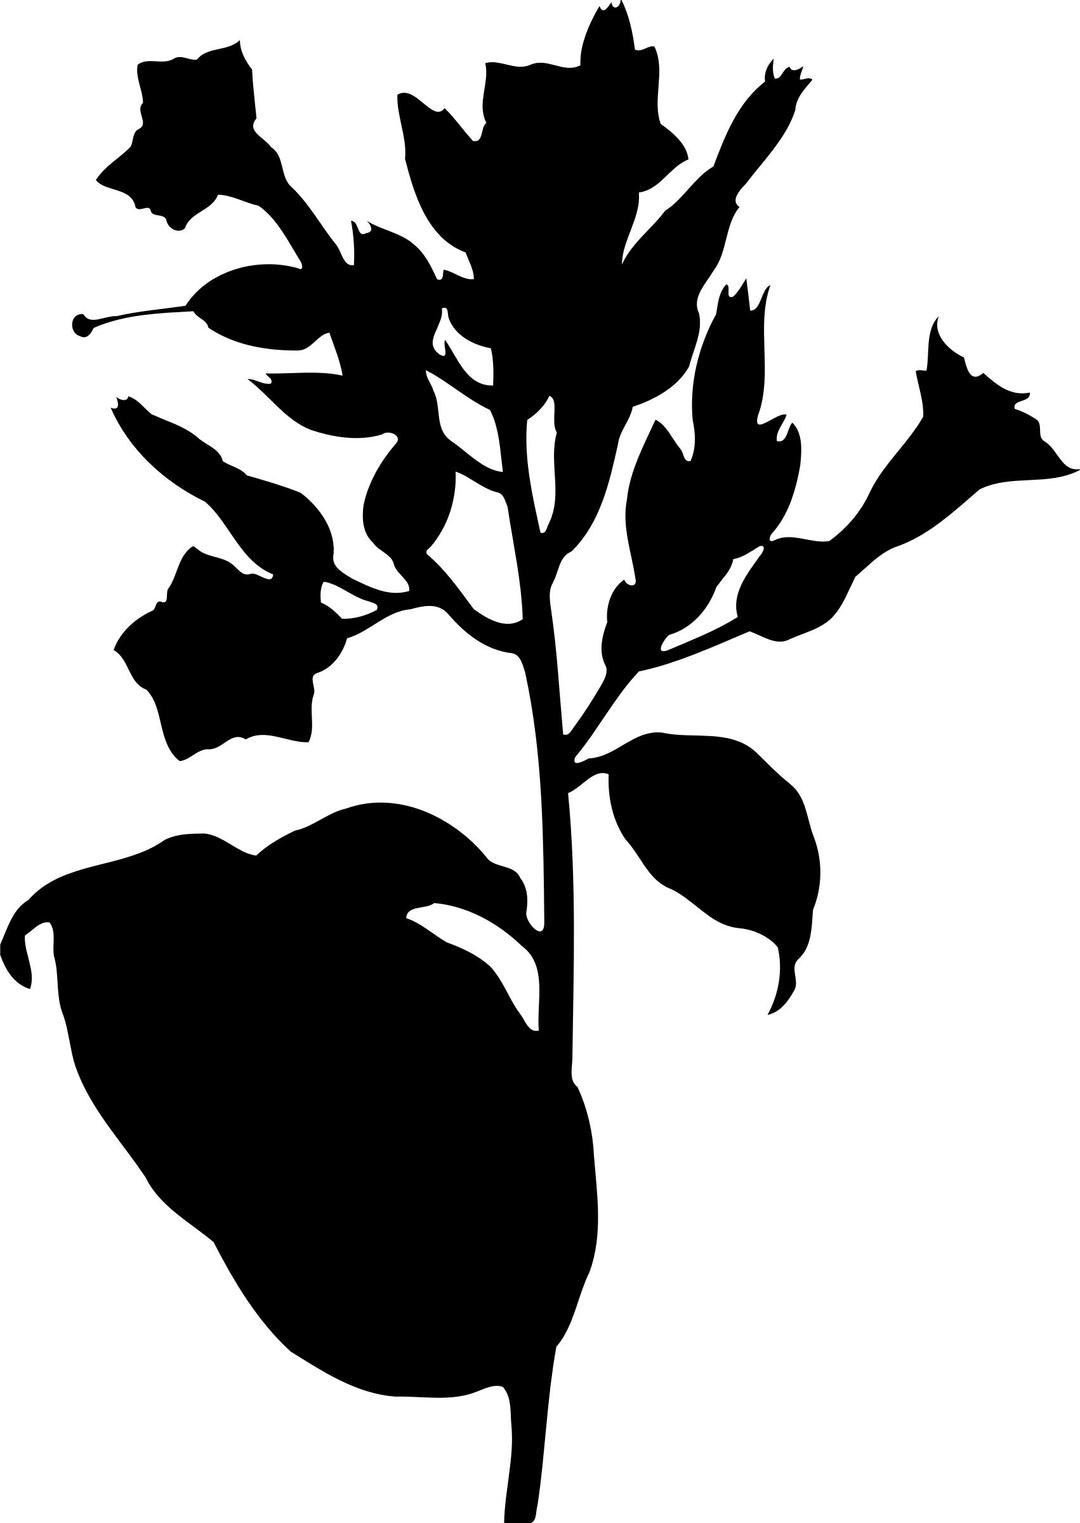 Tobacco plant silhouette png transparent